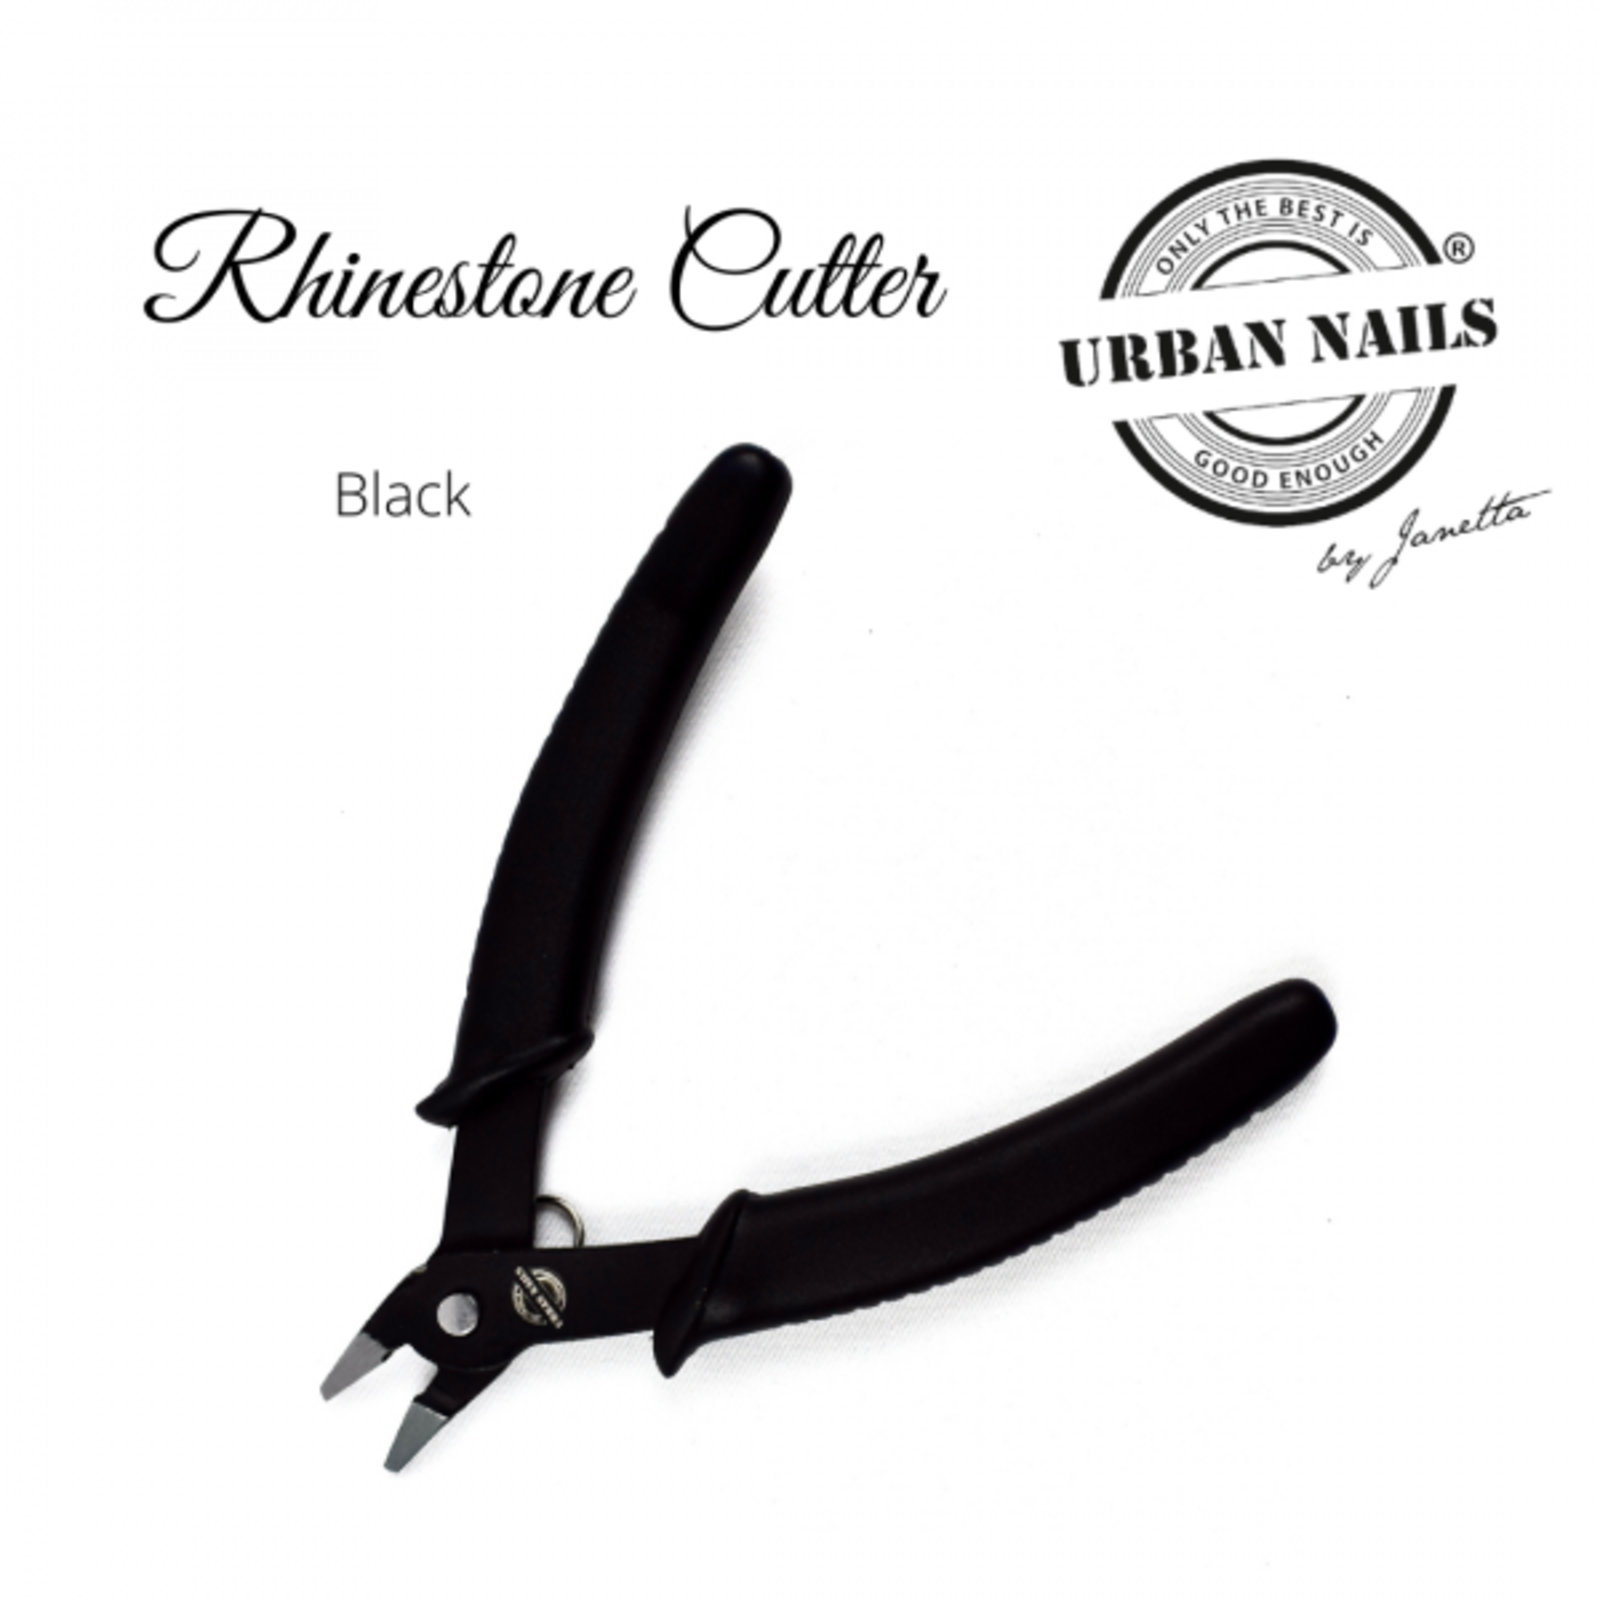 Urban nails Rhinestone cutter black